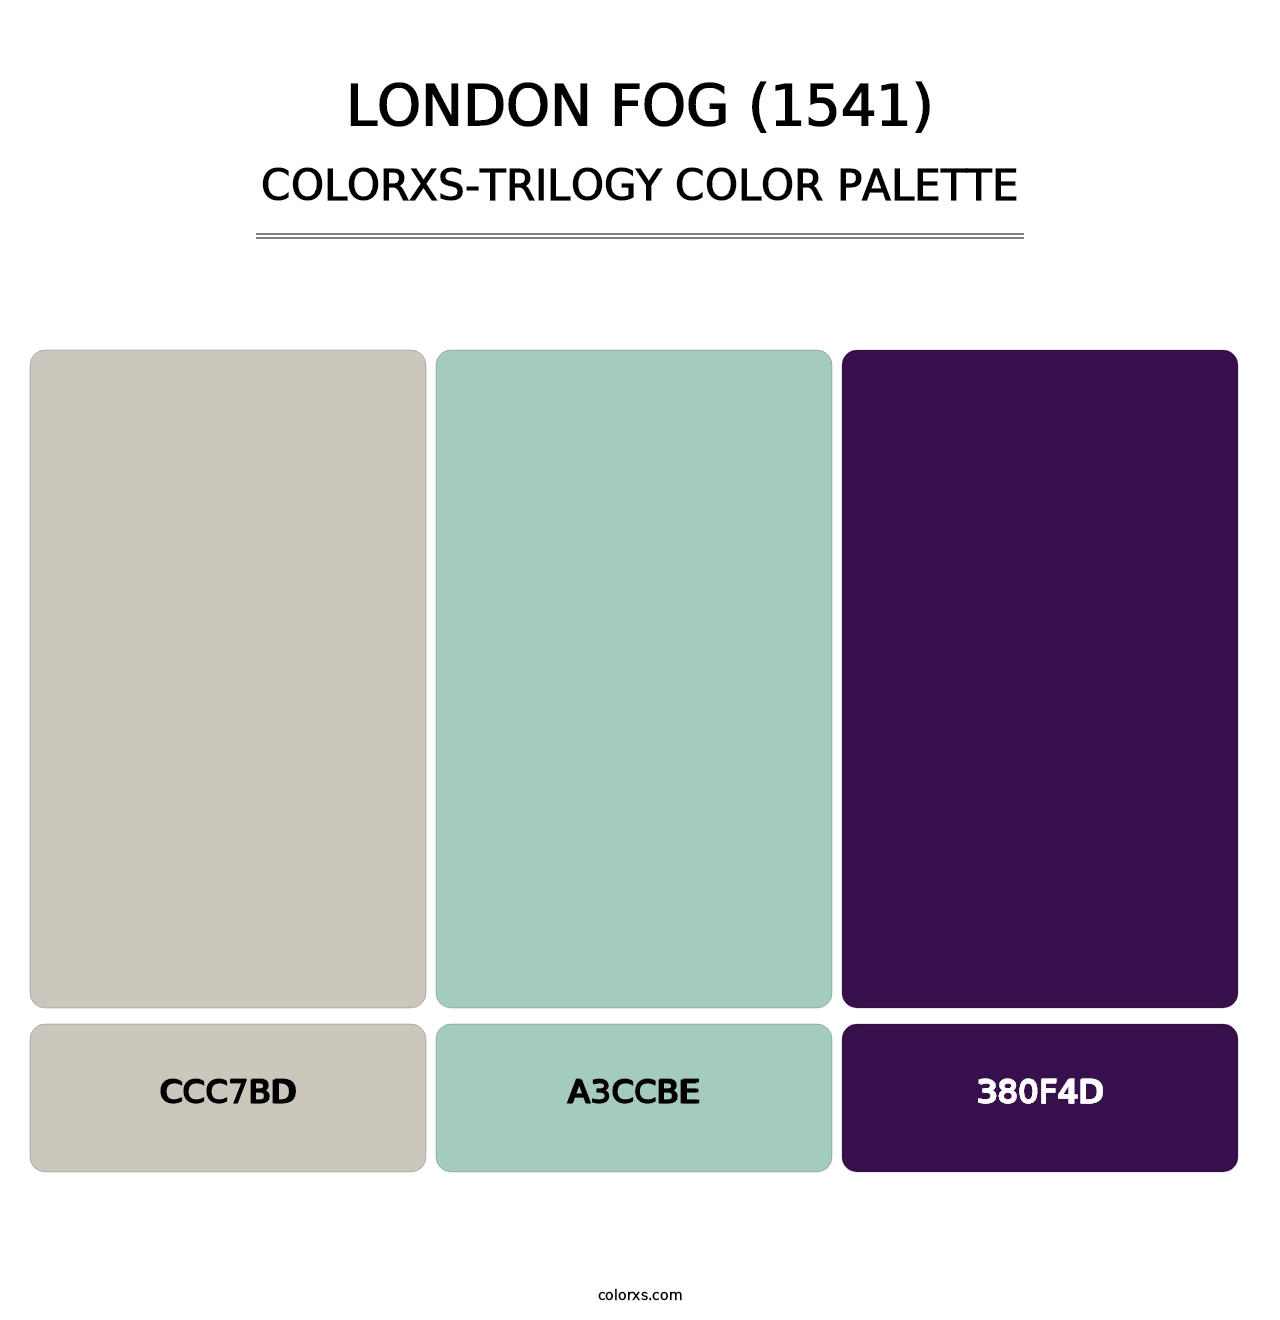 London Fog (1541) - Colorxs Trilogy Palette